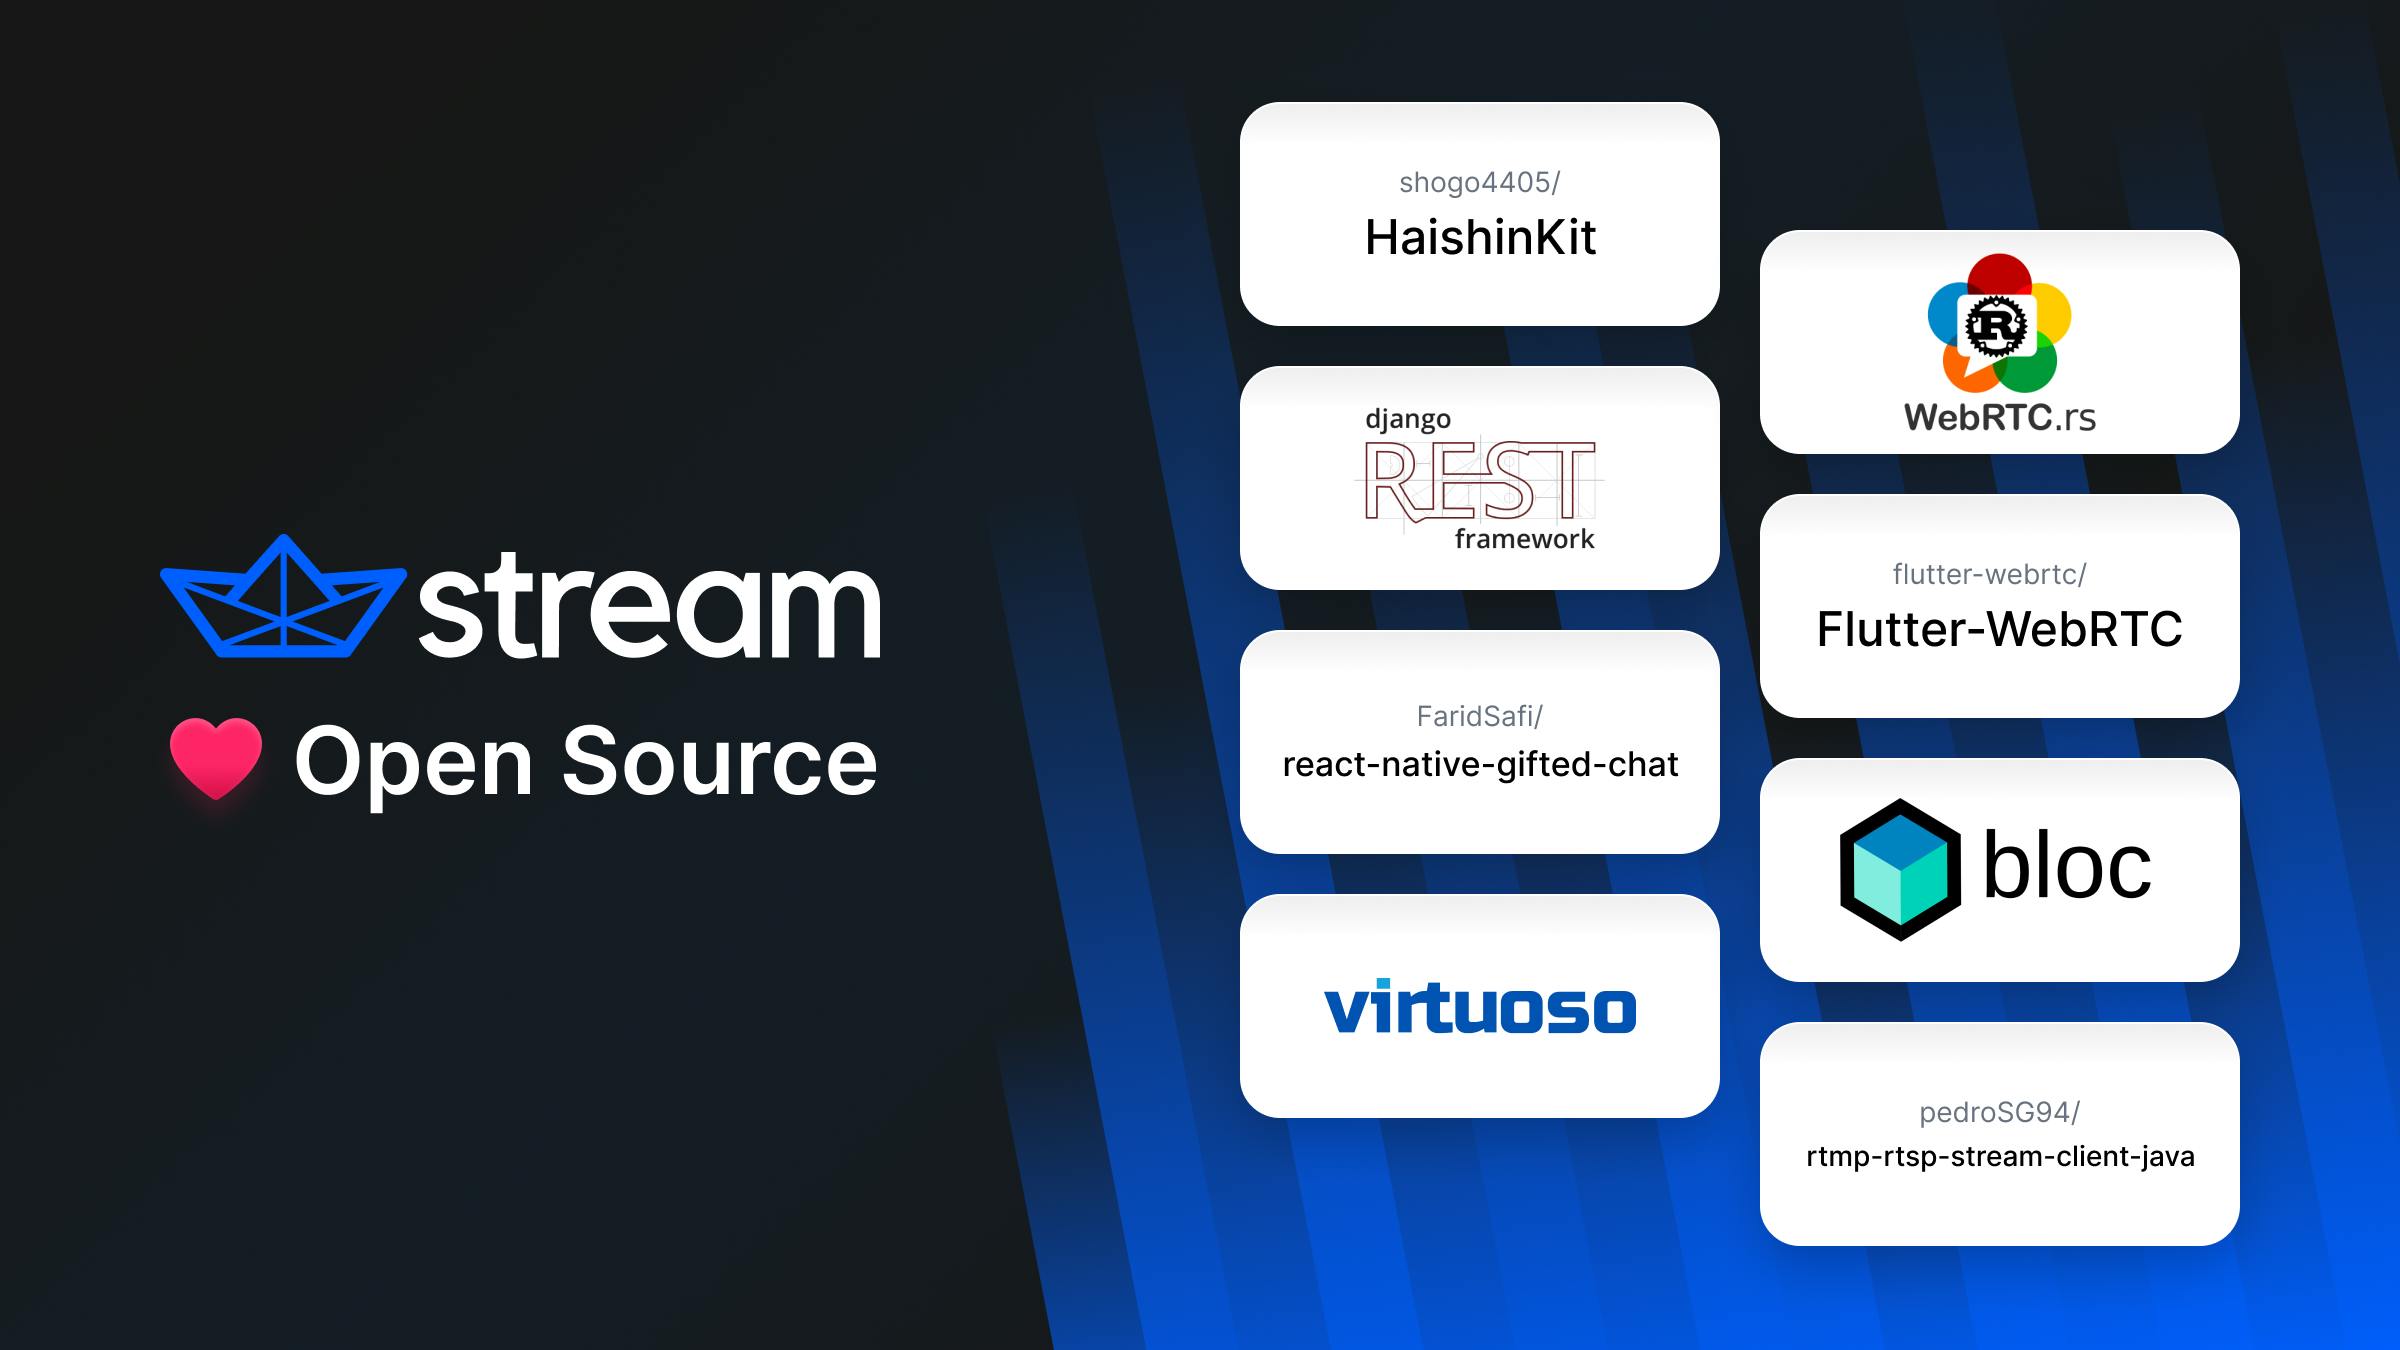 Stream's Open Source Sponsorship